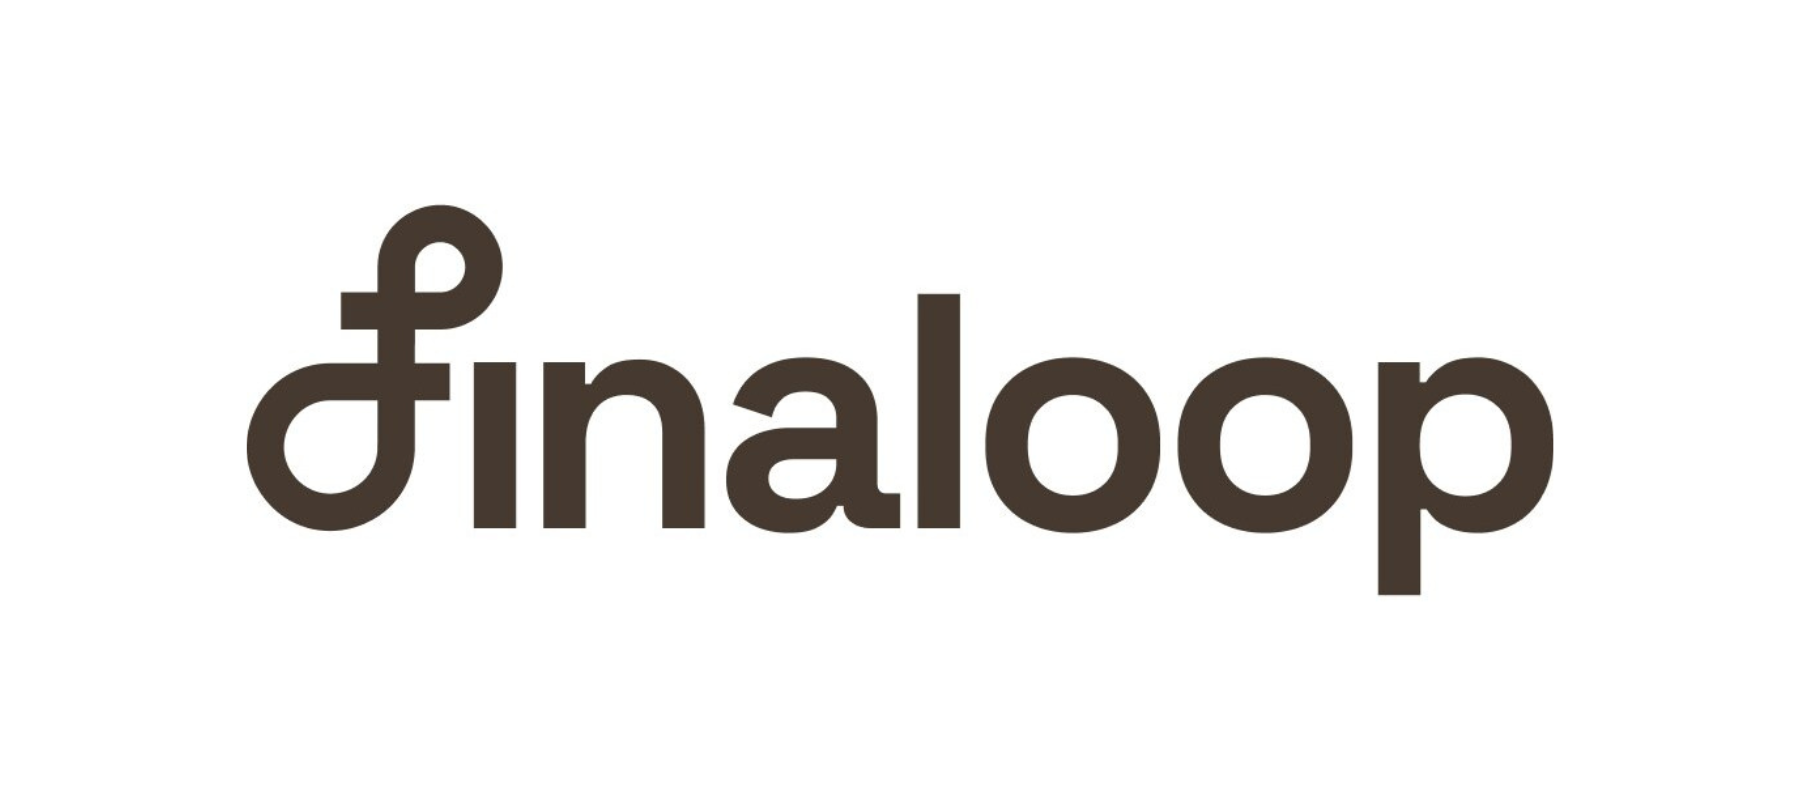 e-Commerce accounting platform Finaloop secures $35m to revolutionize the way retail brands handle finances